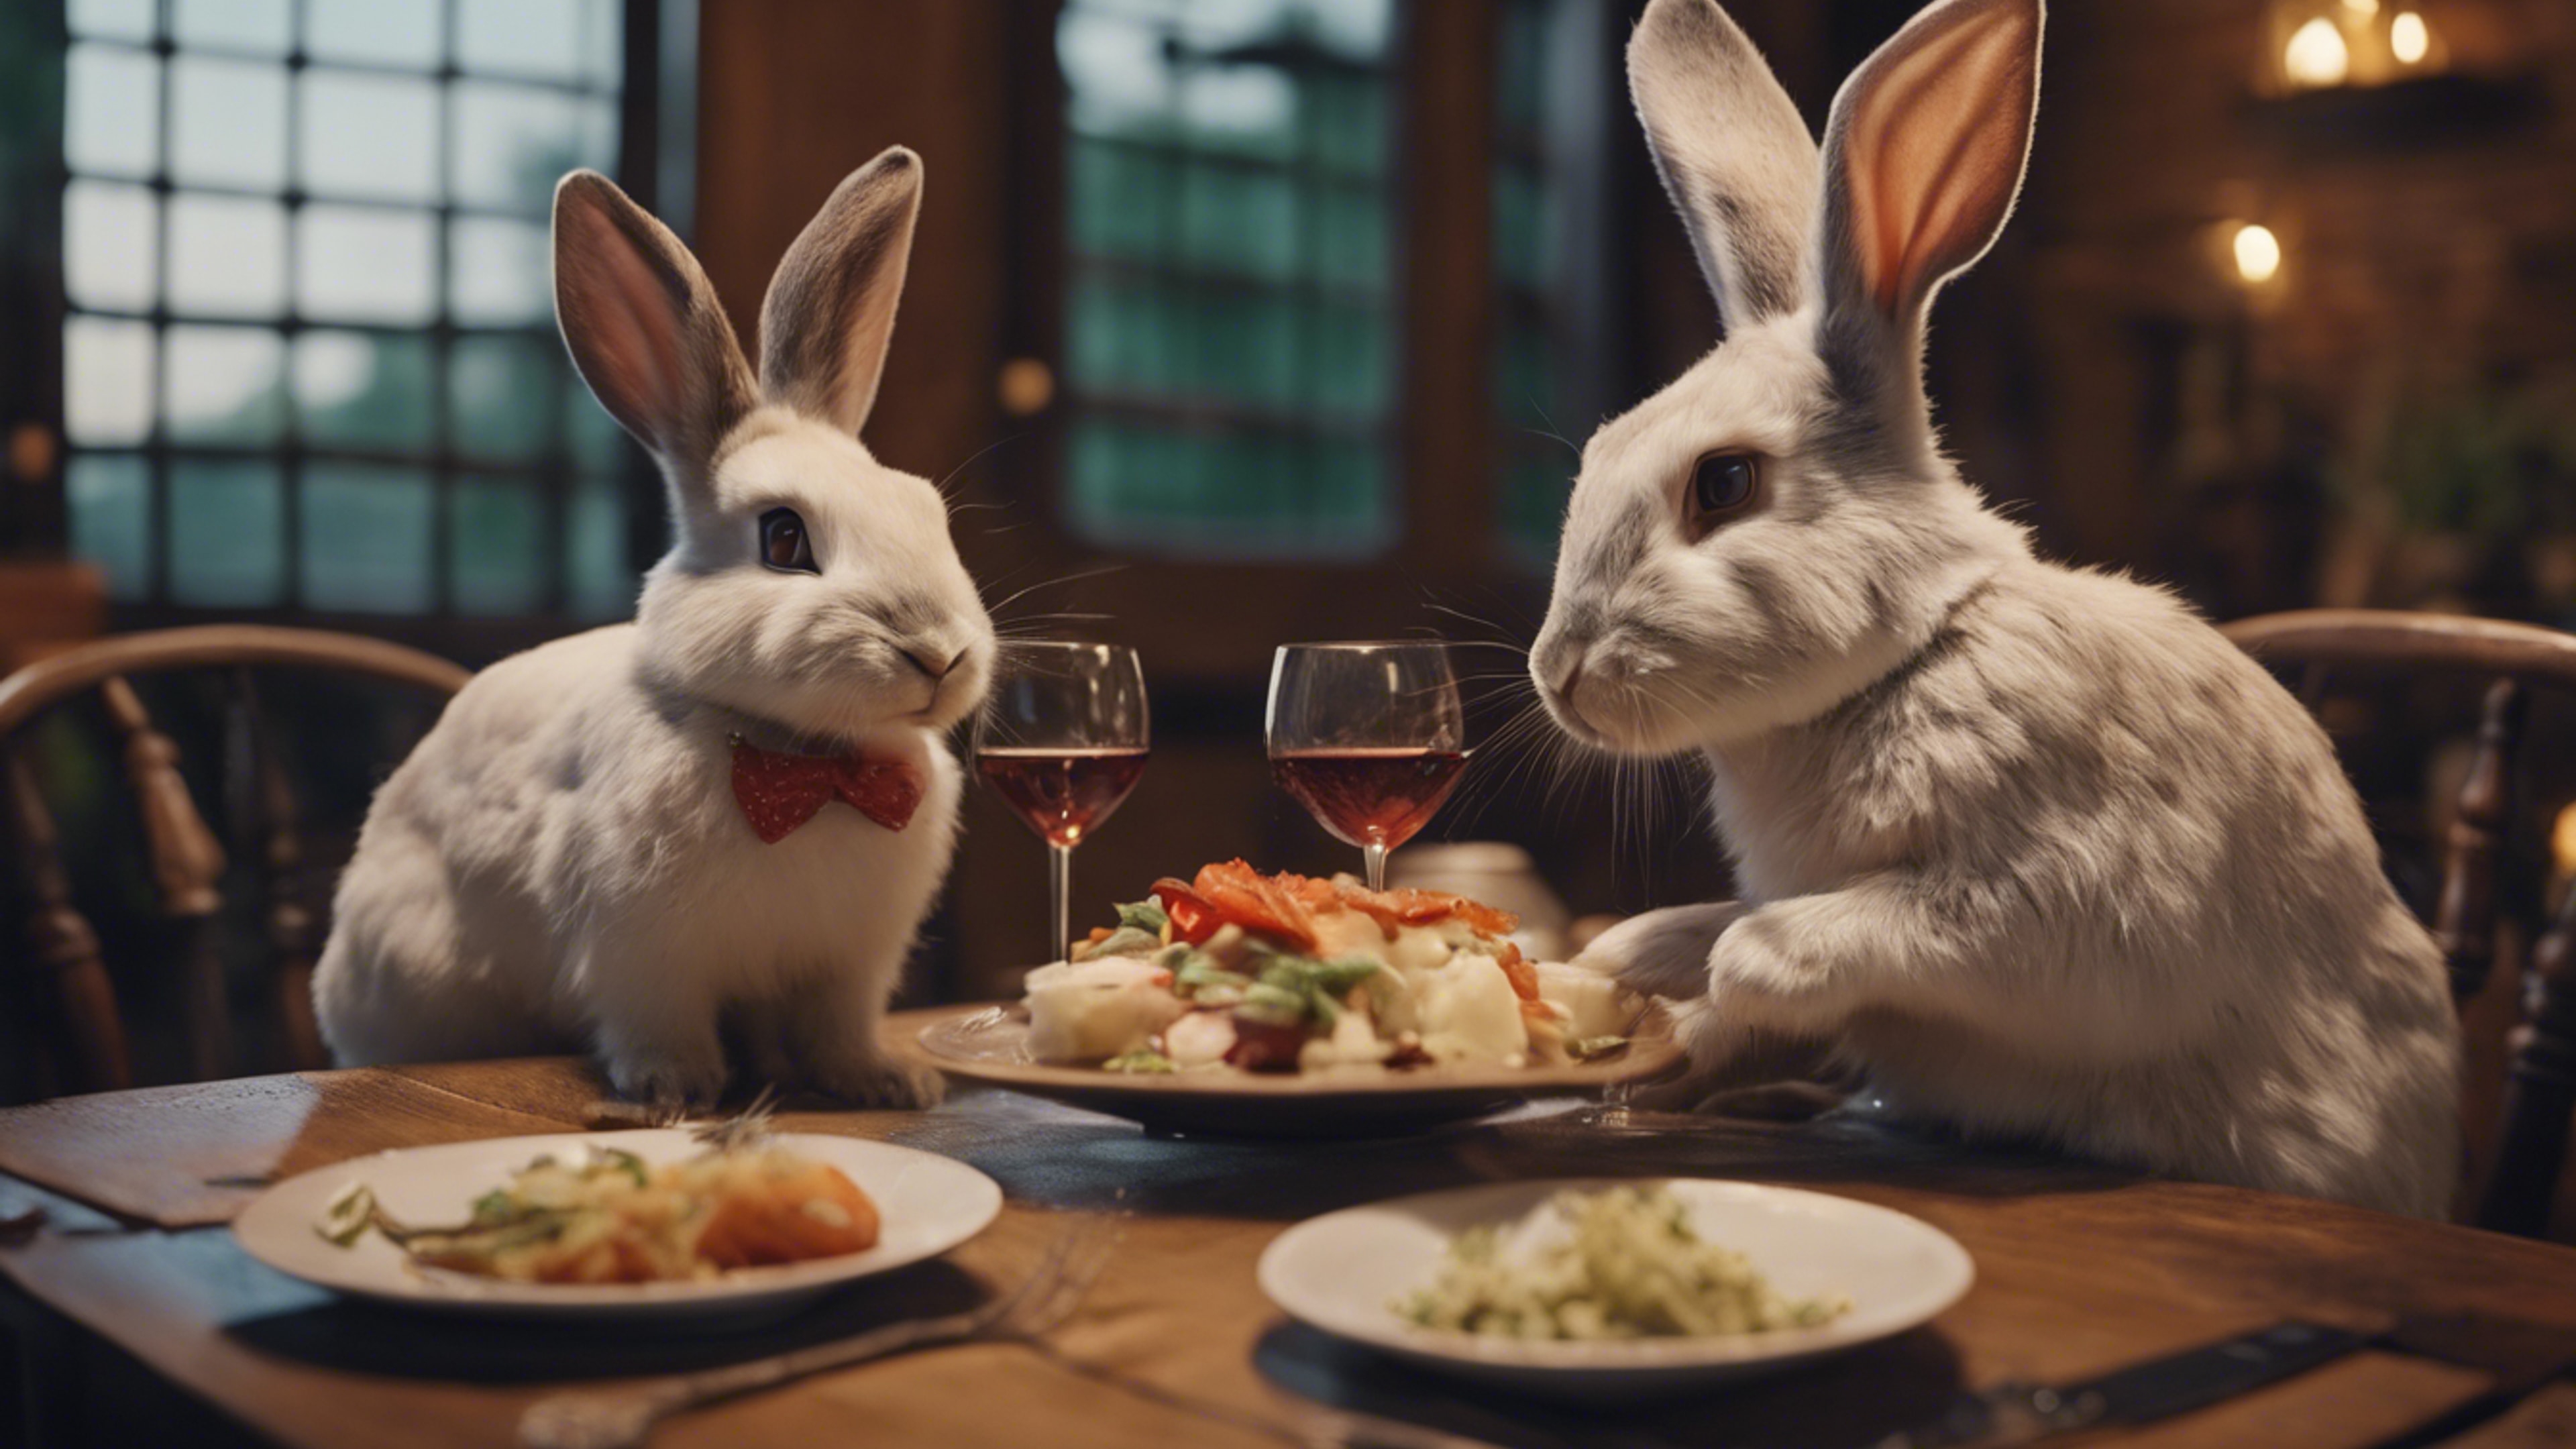 A rabbit couple enjoying a romantic dinner in a quaint, rustic setting. Hình nền[f4a7594170784844a7a3]